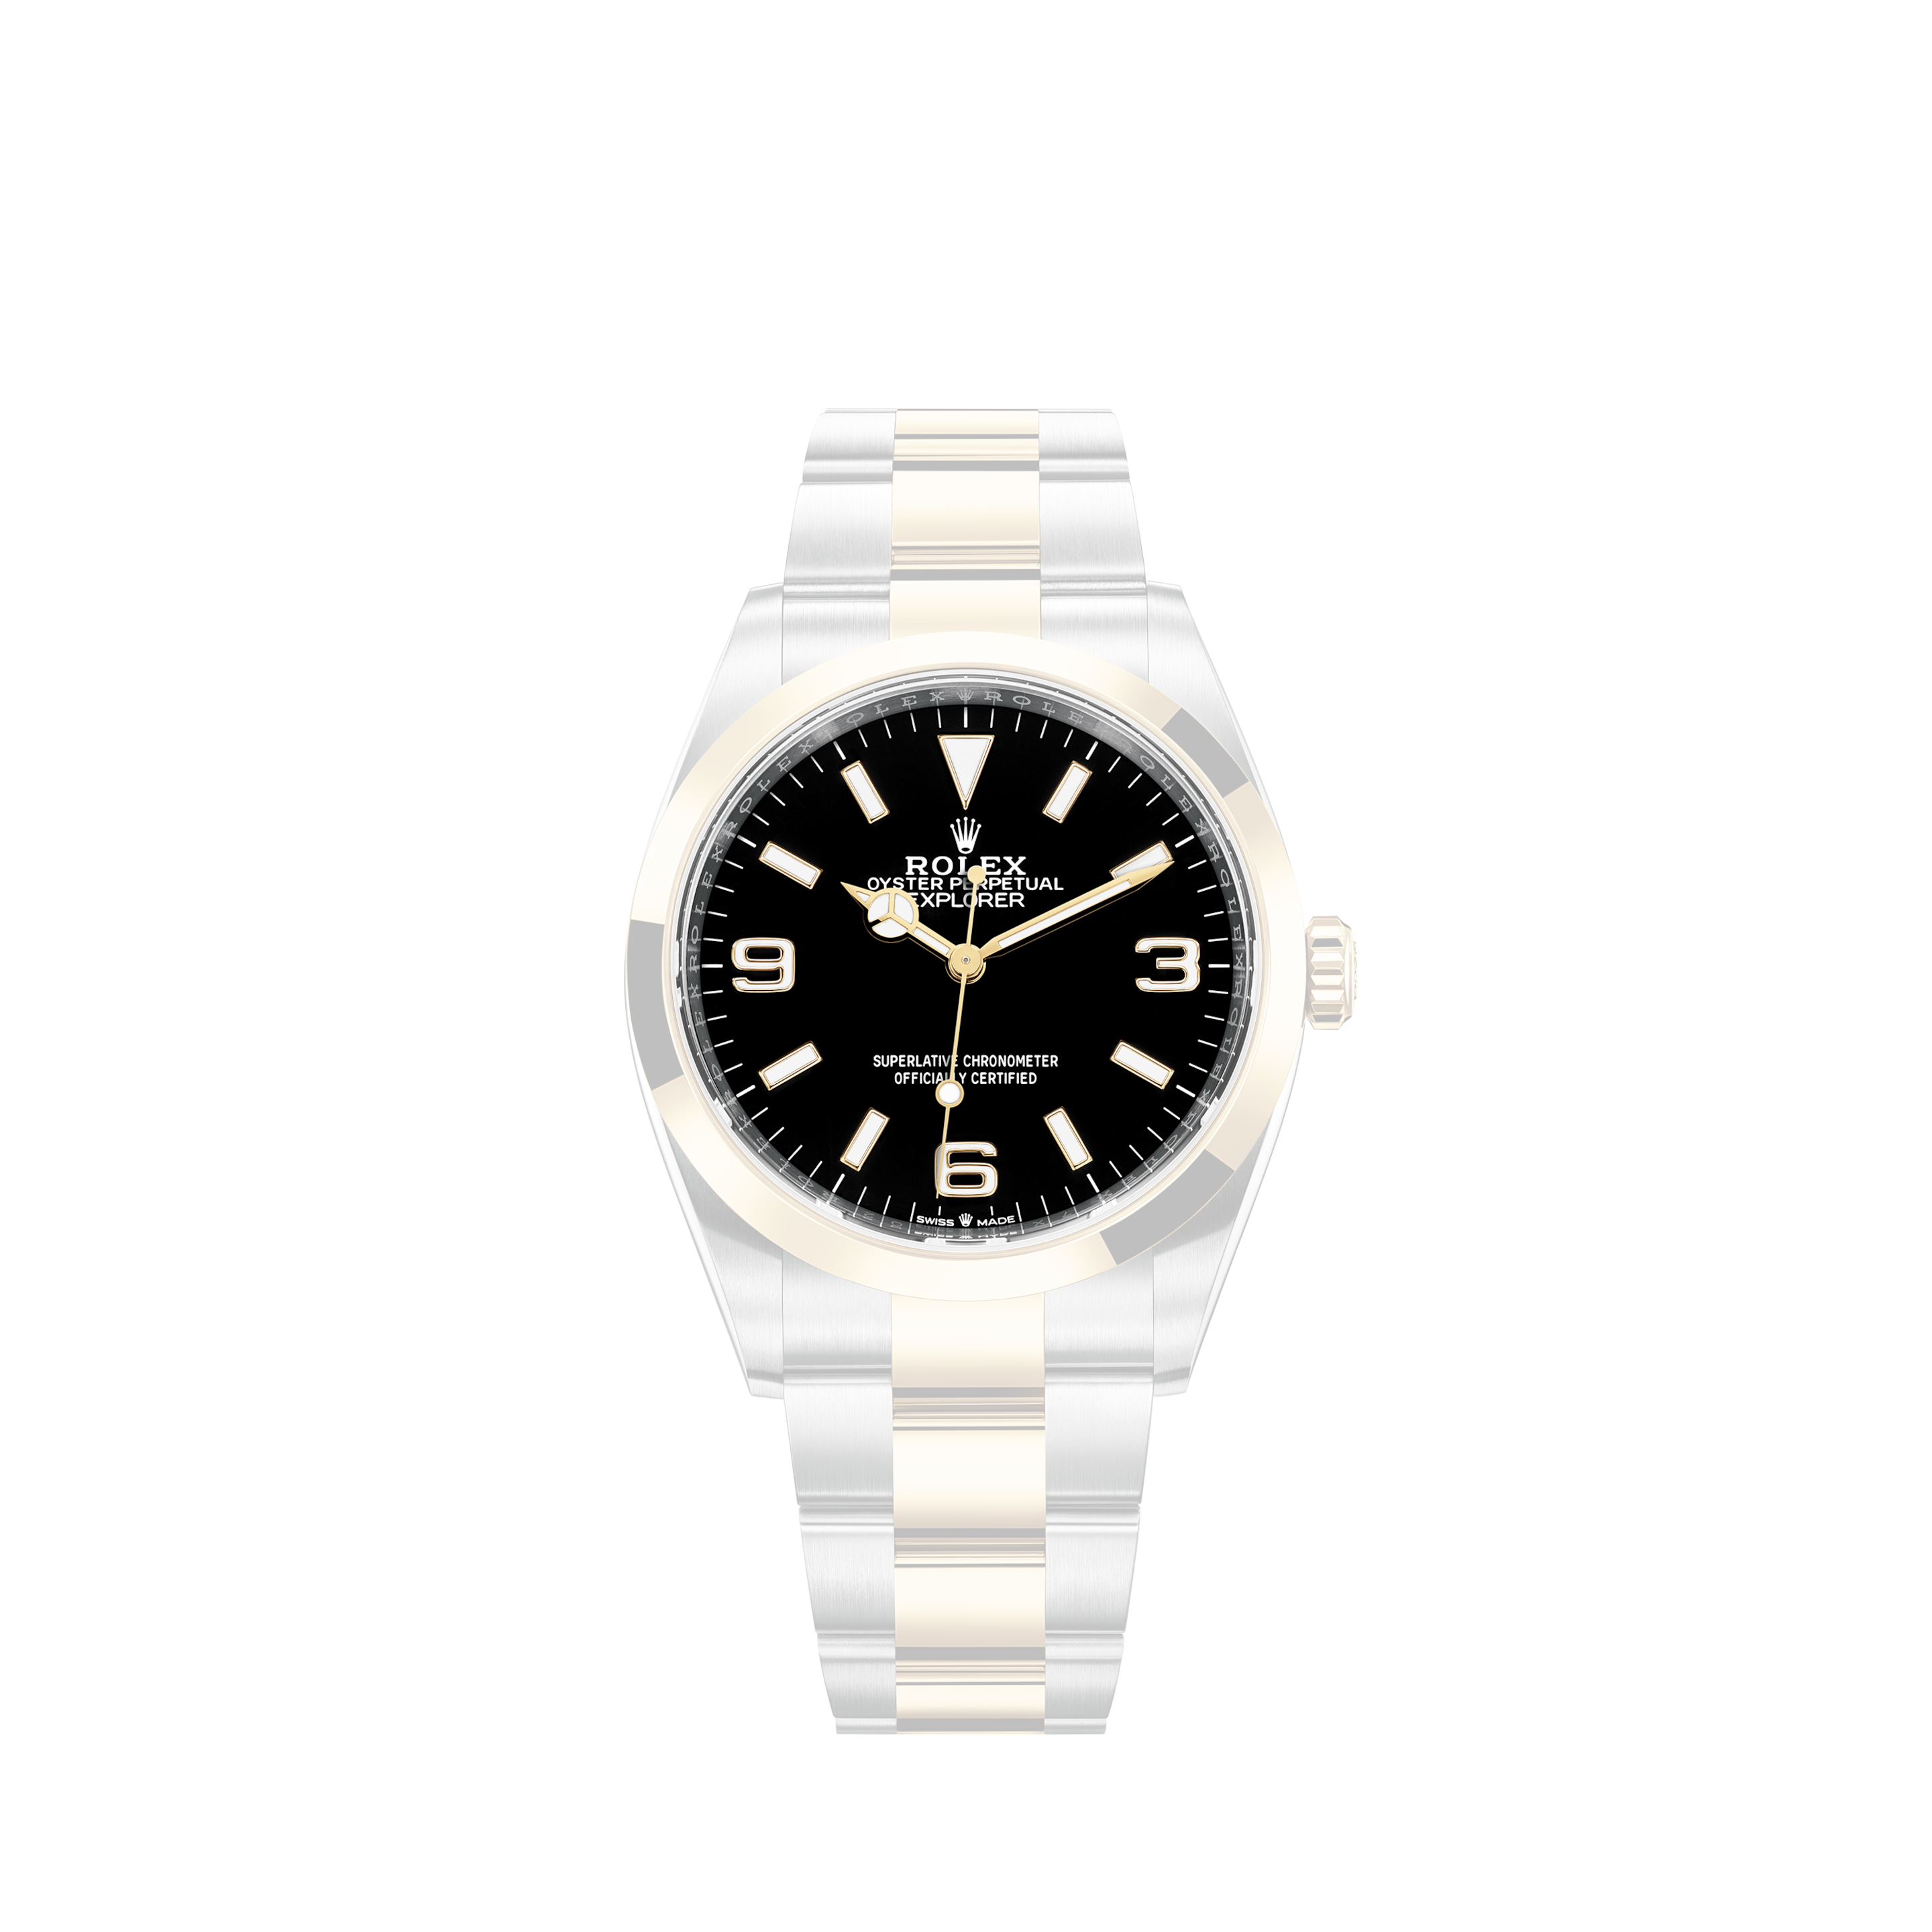 Rolex Datejust Pearlmaster 18k Gold Diamond Watch 80318